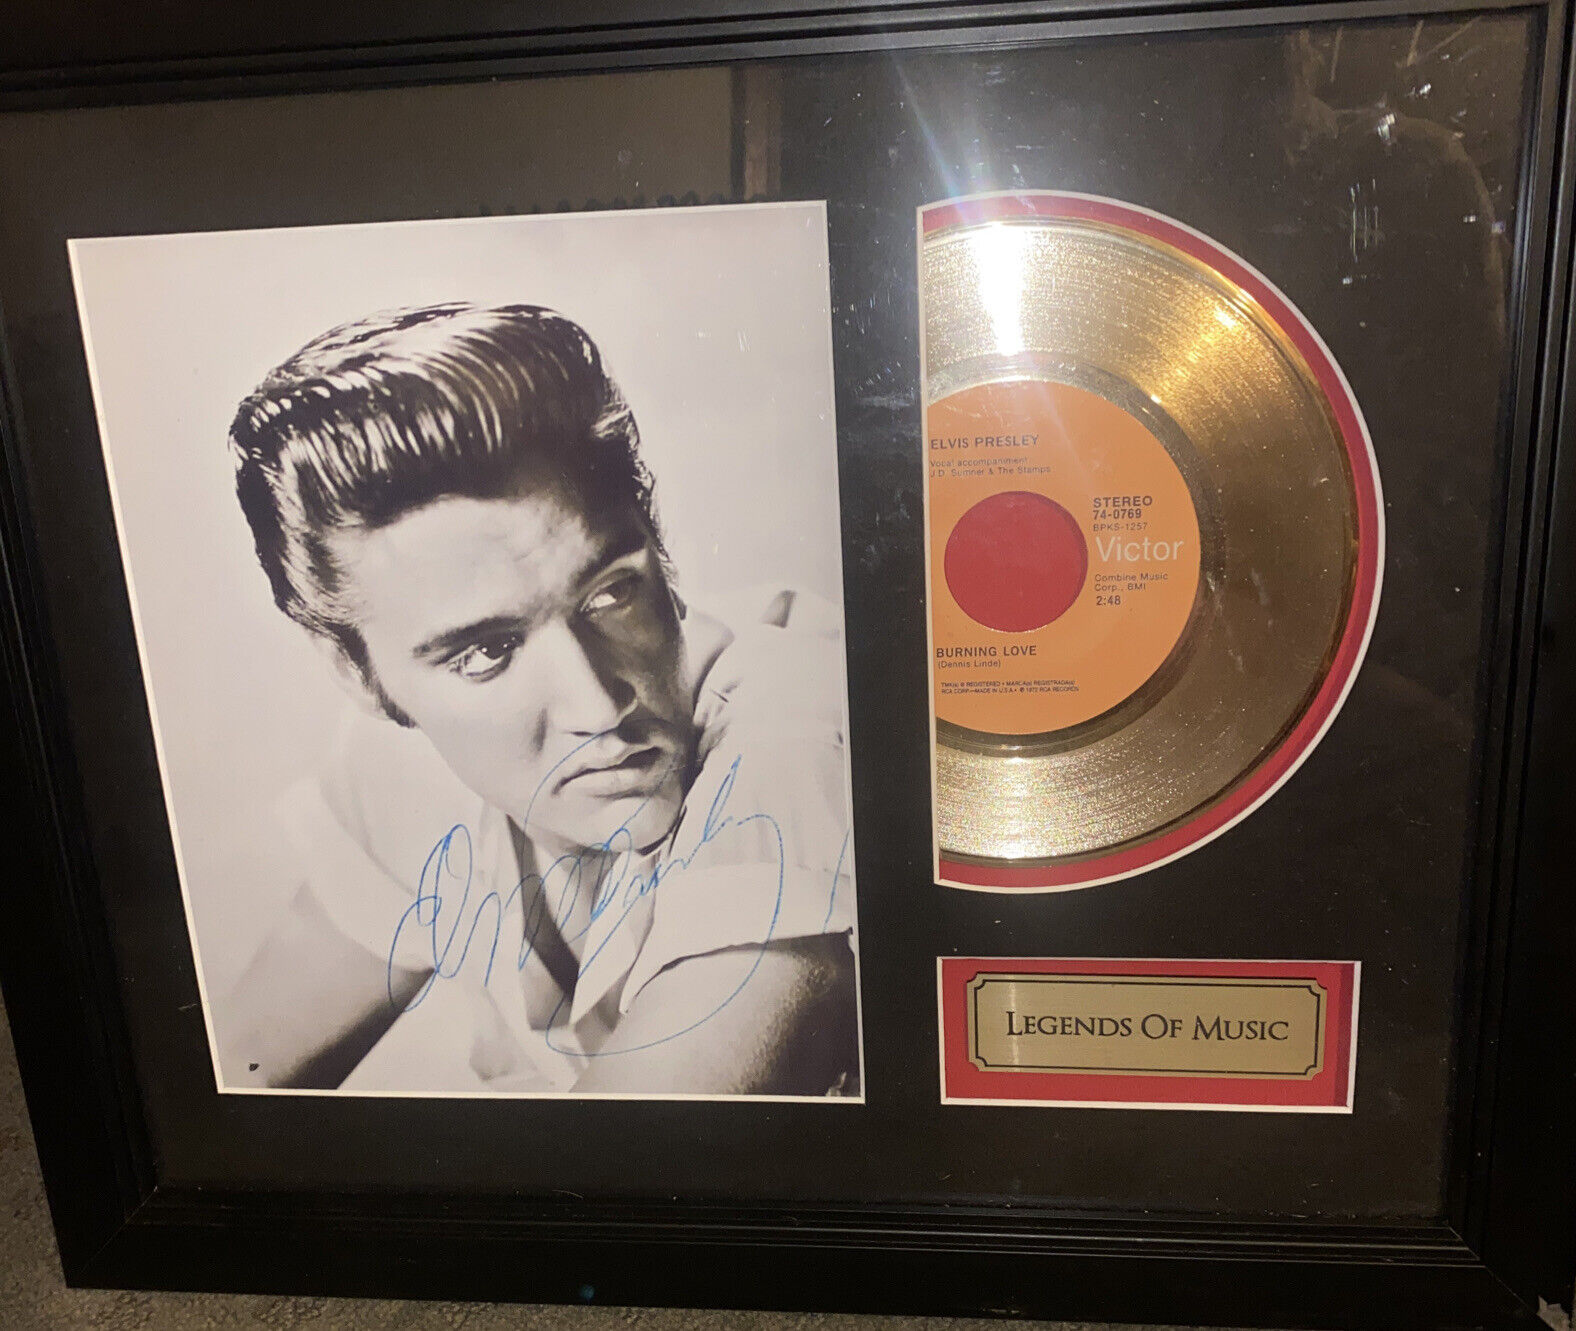 Legends Of Music Elvis Presley NUMBERED Gold Record “burning love” 384/500